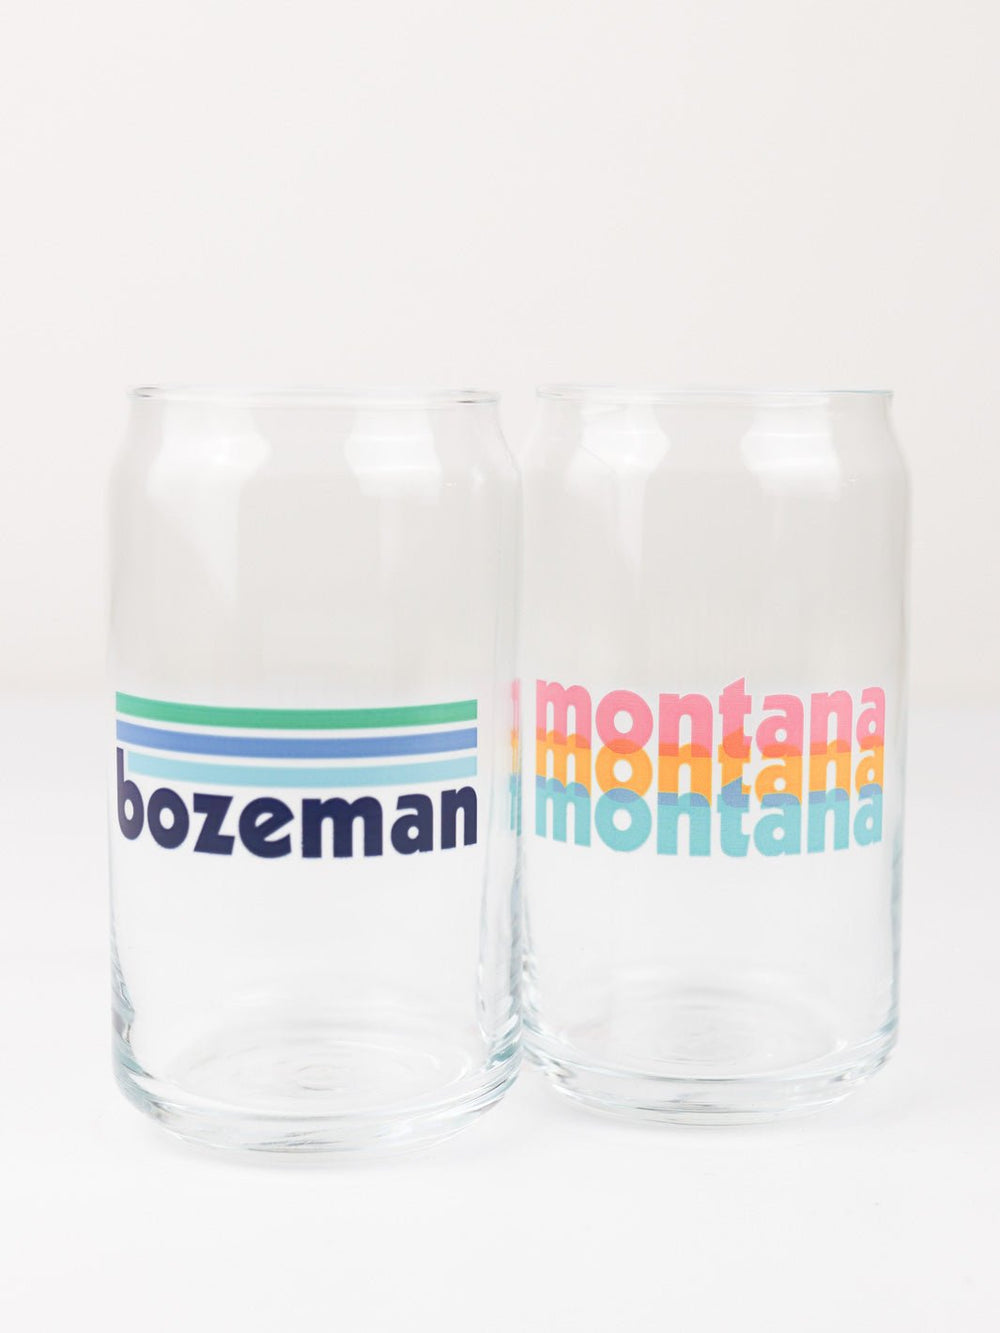 Bozeman Can Glass - Heyday